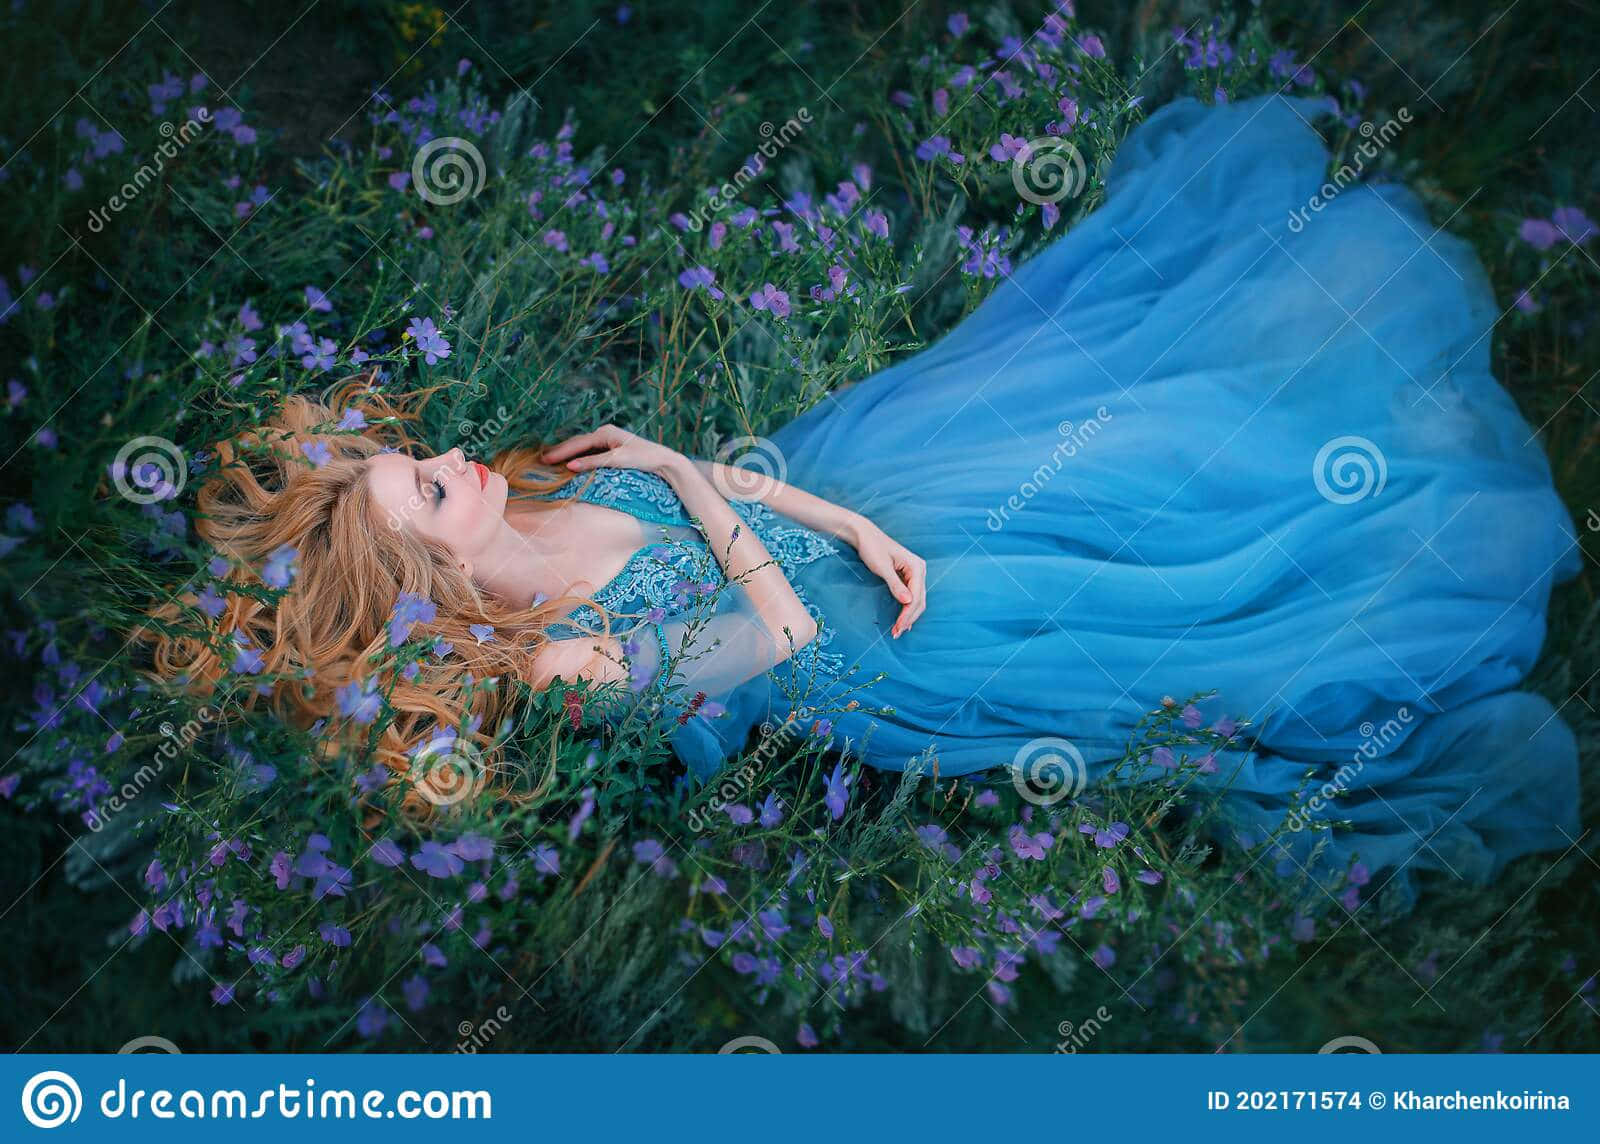 Caption: The Enchanting Slumber: Sleeping Beauty In Dreamland Wallpaper